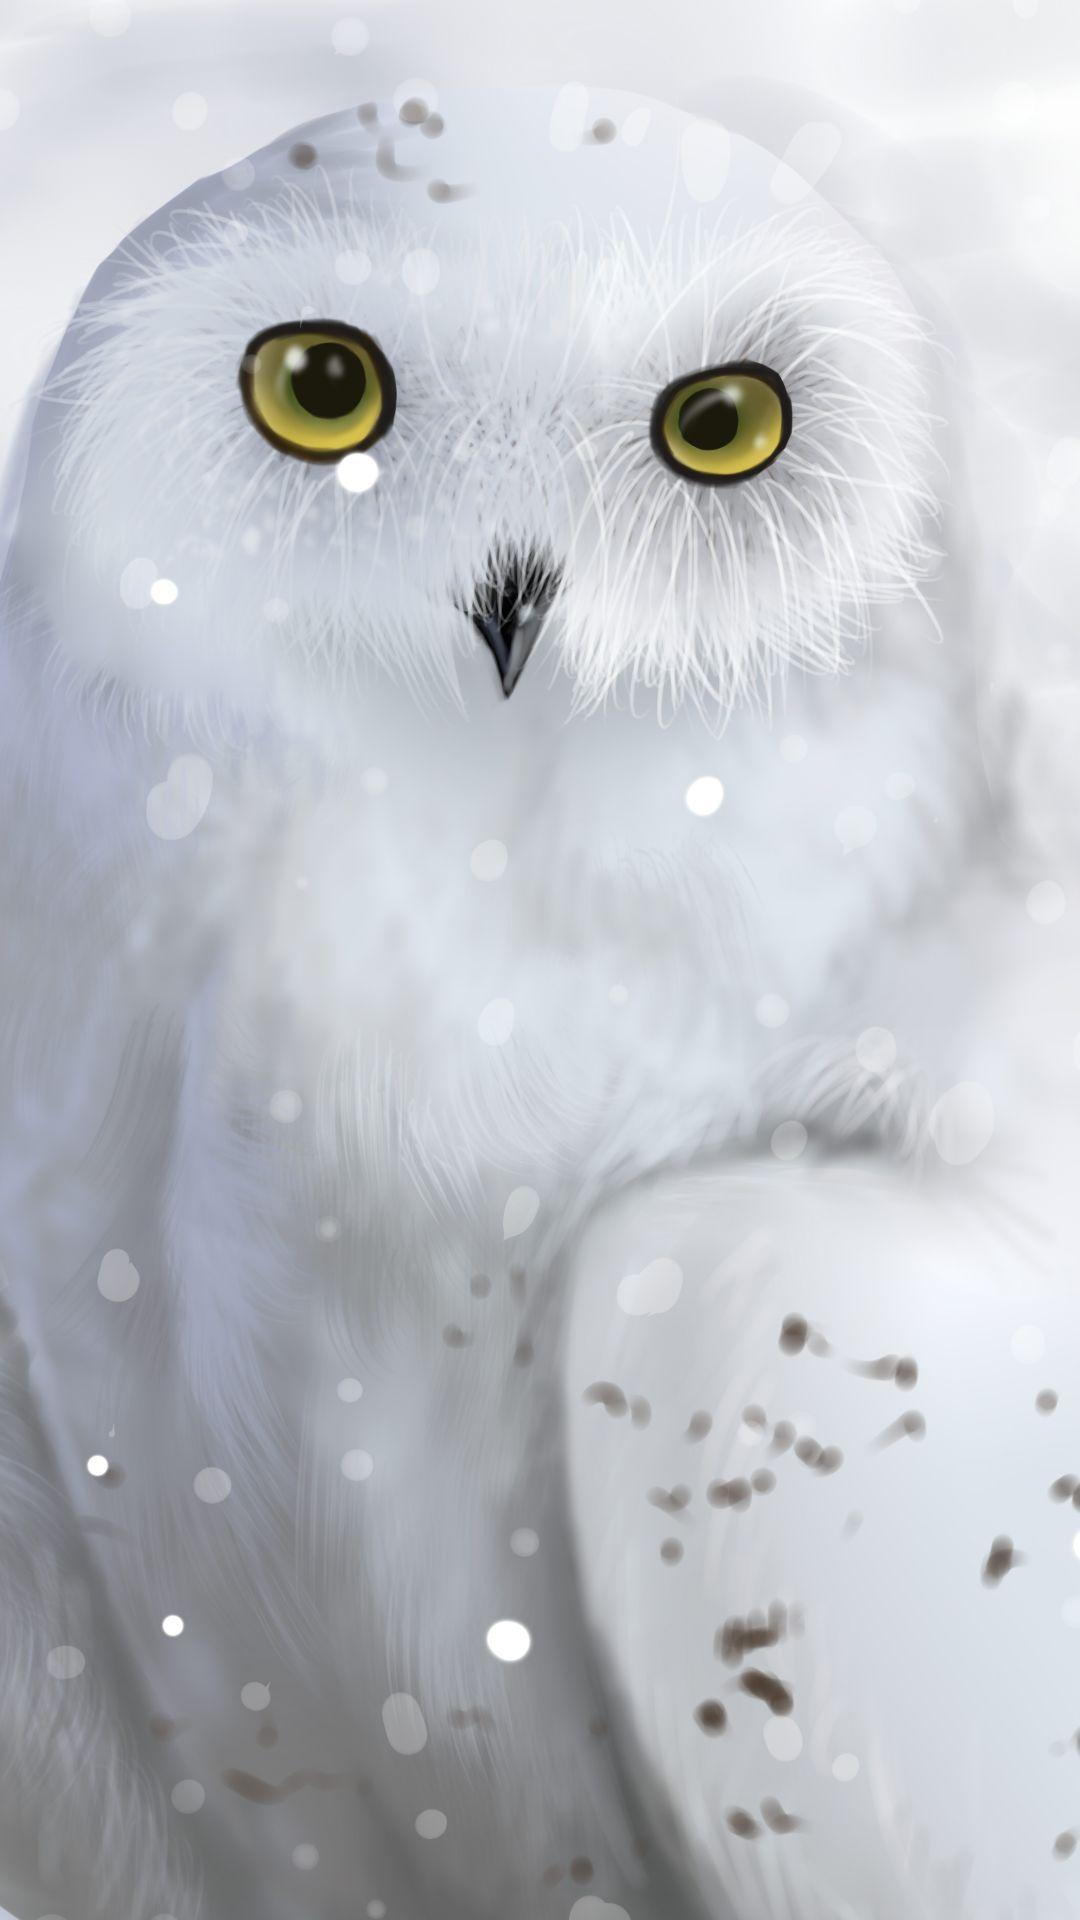 Snowy Owl (1080x1920) Mobile Wallpaper. Owl wallpaper, Owls drawing, Cute owls wallpaper